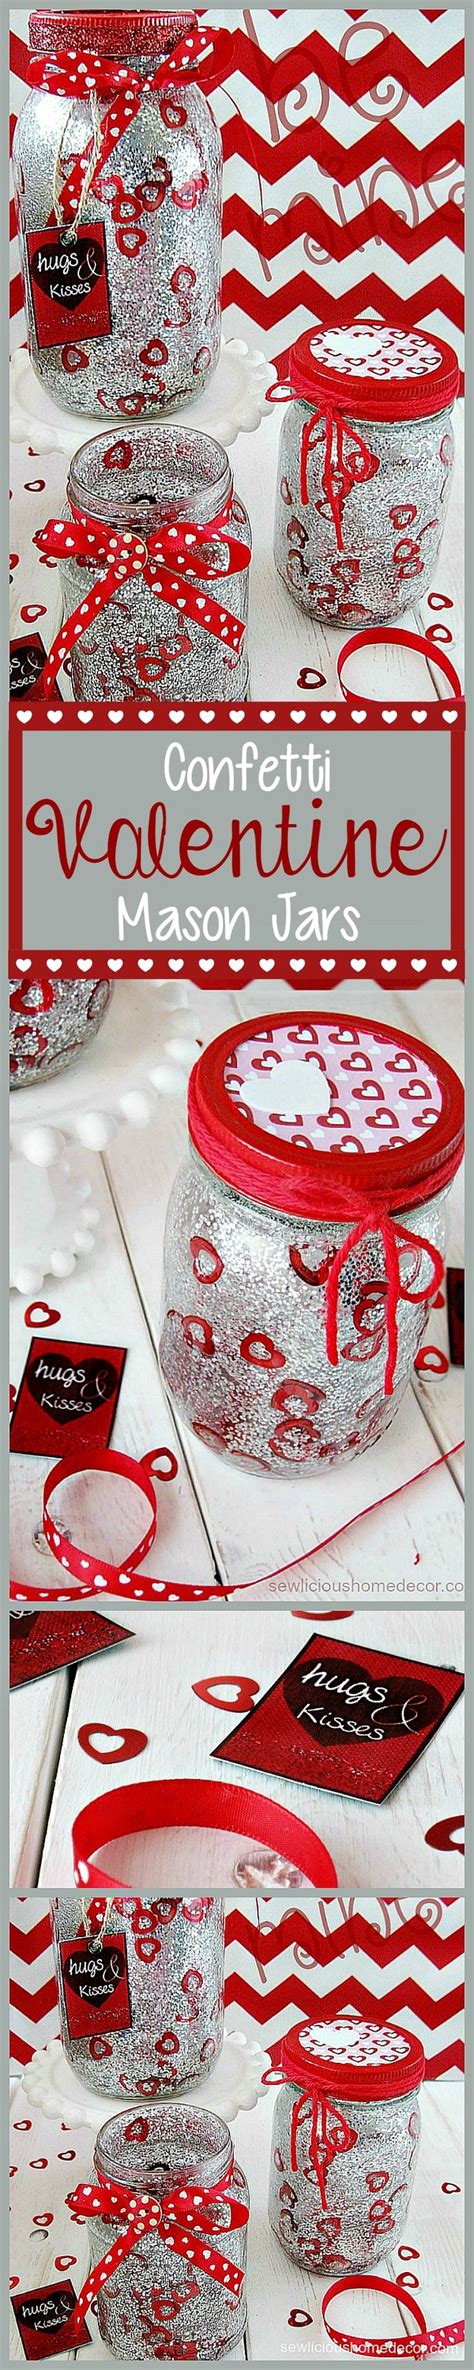 Confetti Mason Jars Valentine Mason Jar